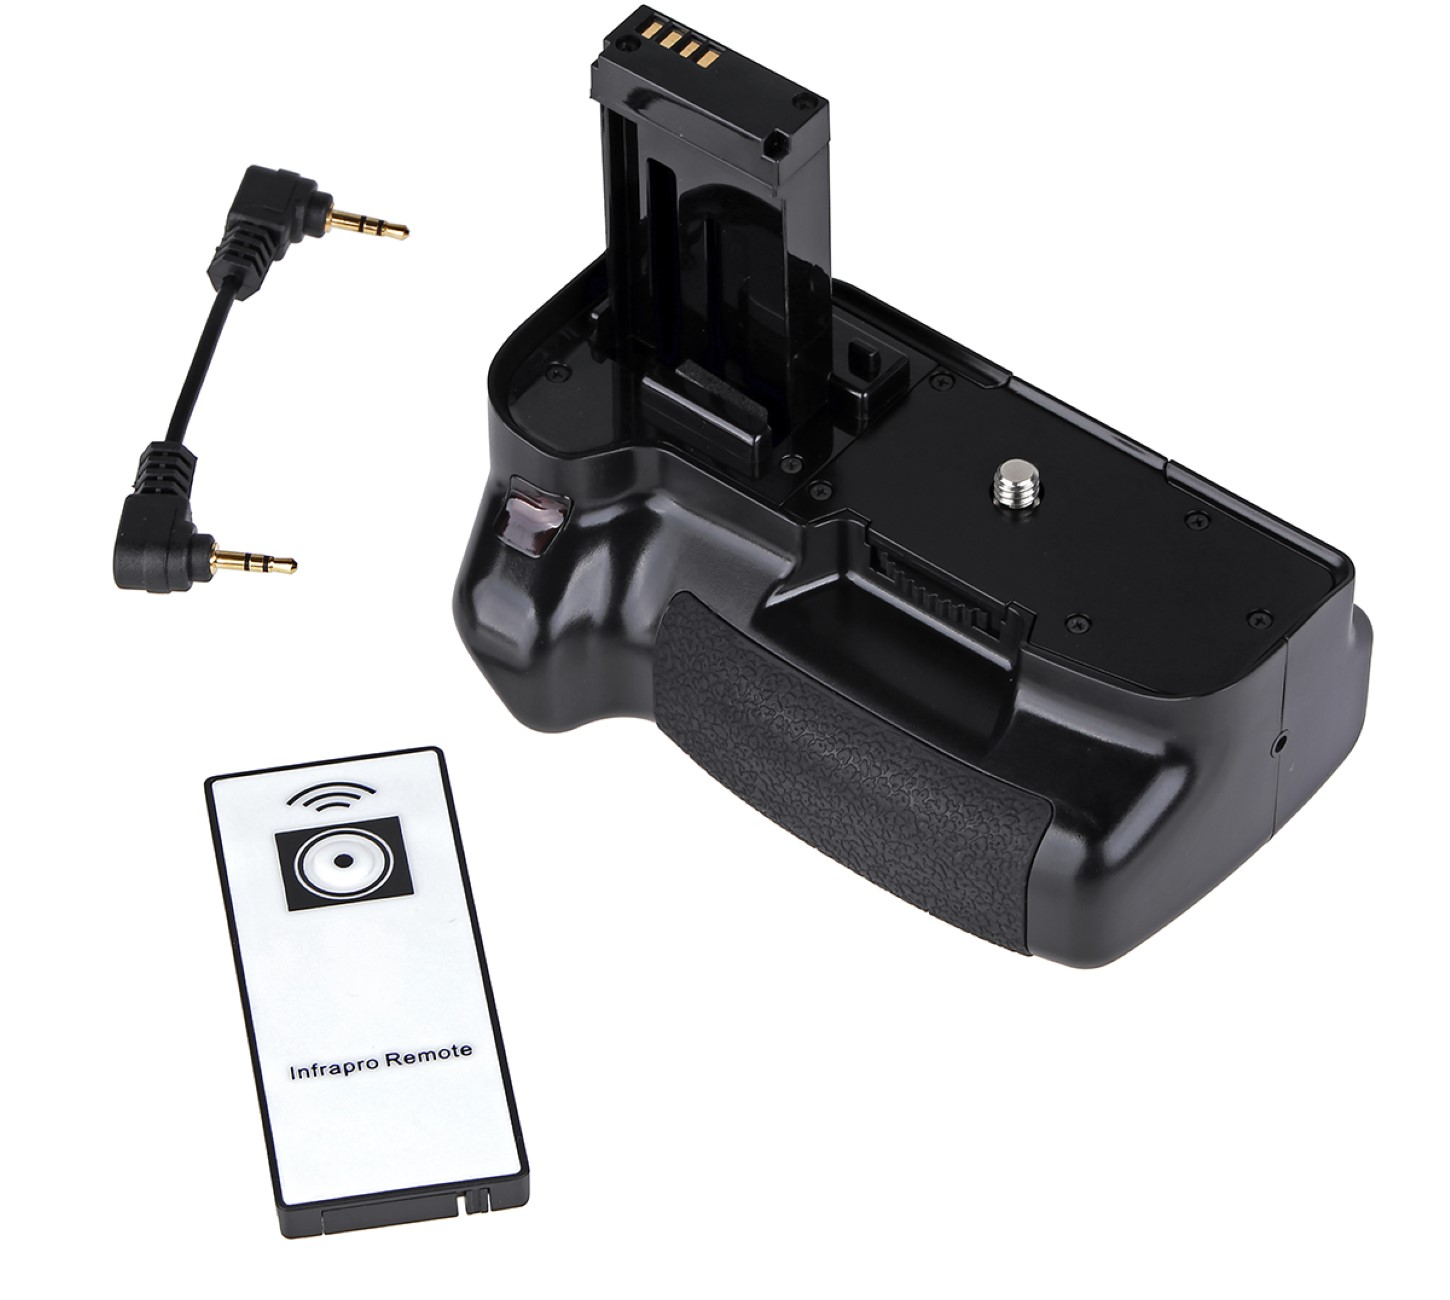 + + LP-E12 Akku EOS 2x Canon Black 1x USB Batteriegriff-Set, 100D Dual Set für AYEX Ladegerät, + Batteriegriff IR-Fernauslöser